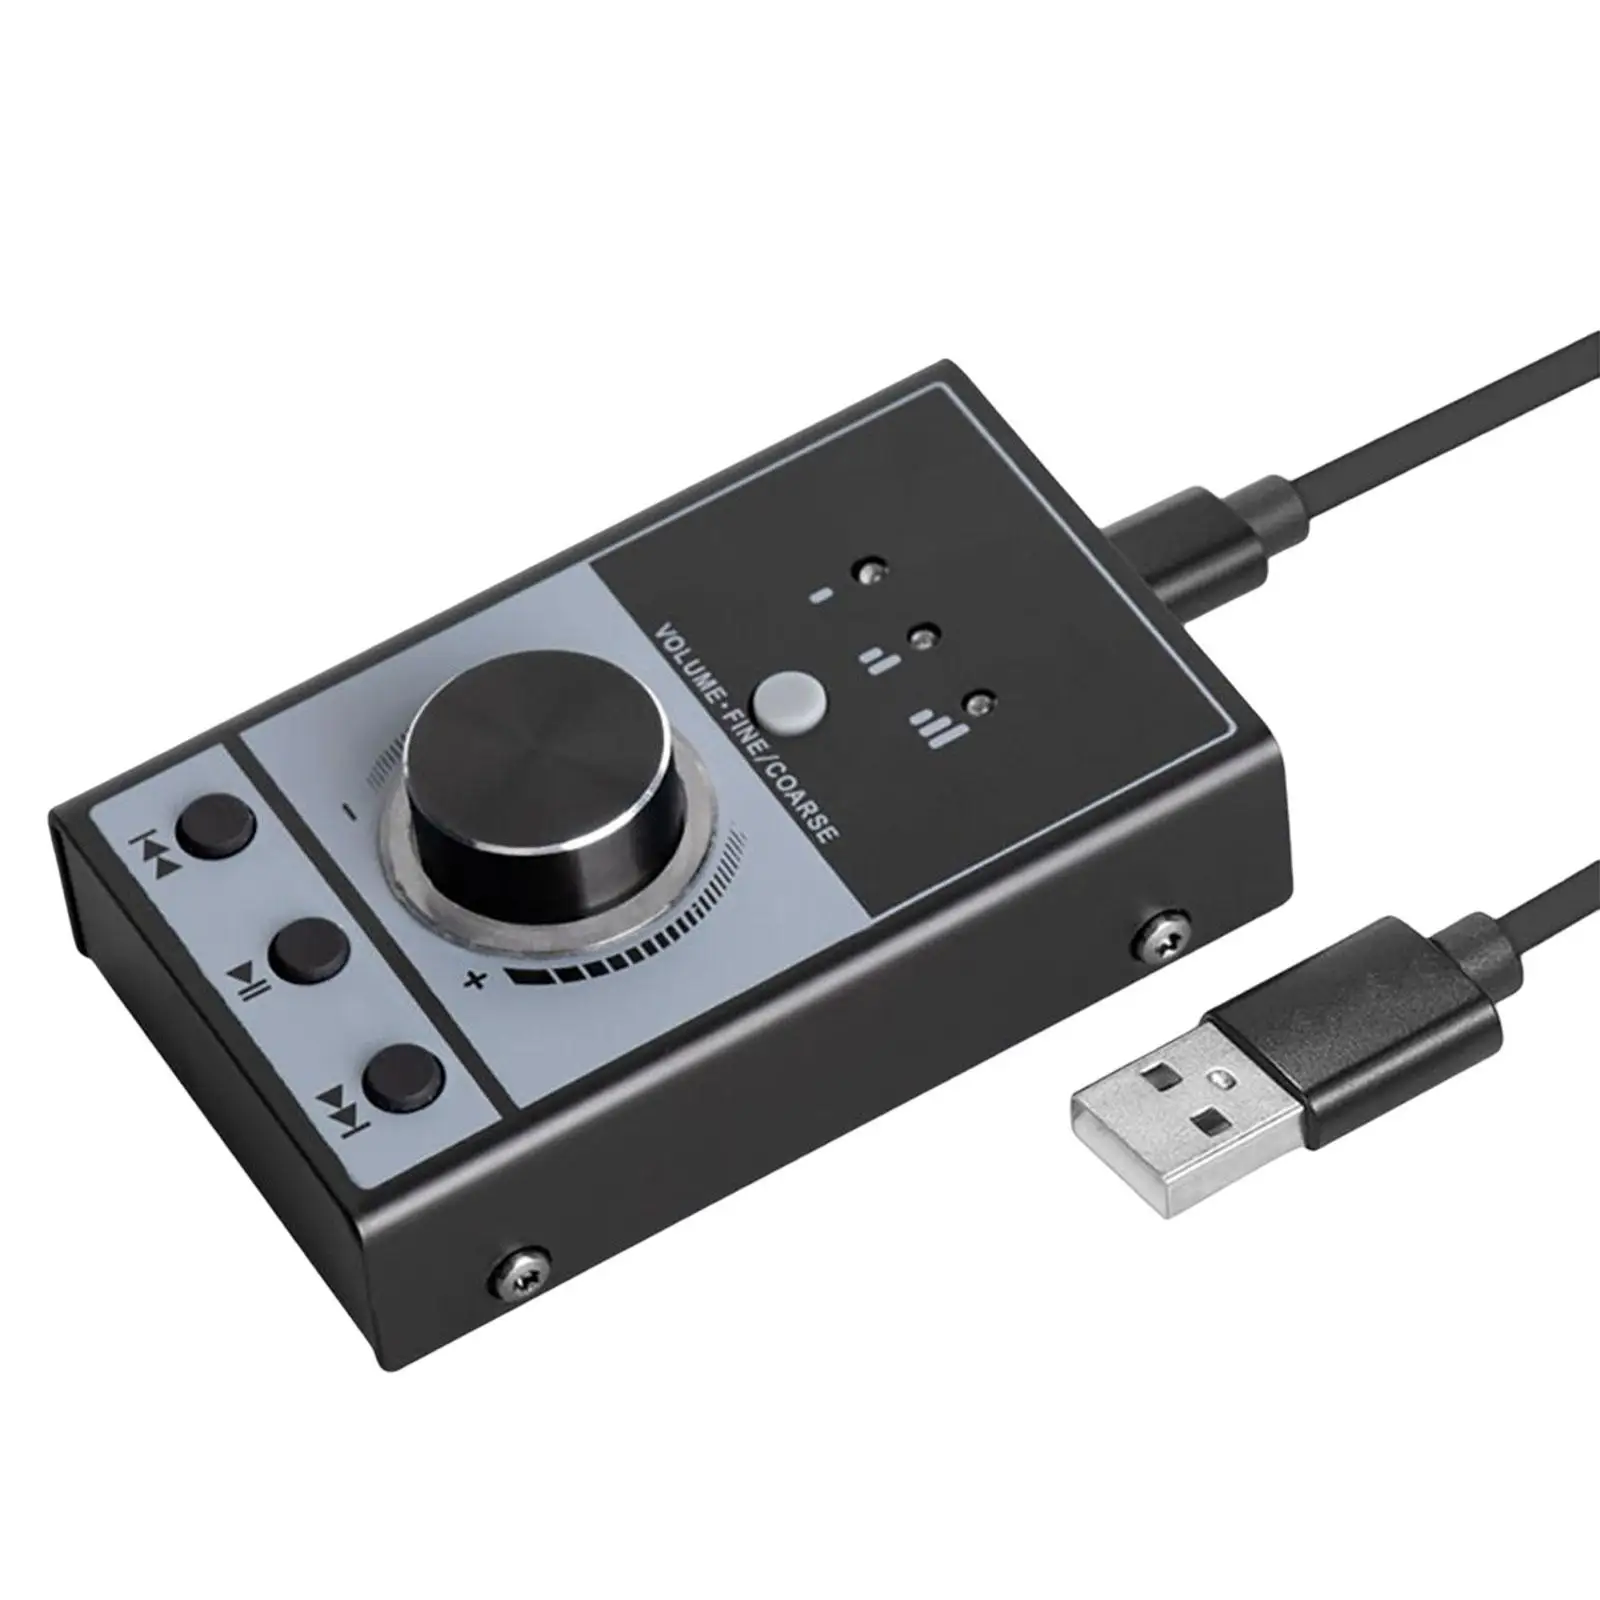 Multimedia Controller Knob 3 Volume Control Modes USB Audio Volume Control Knob Audio Adjuster for Win7/8/10 PC Computer